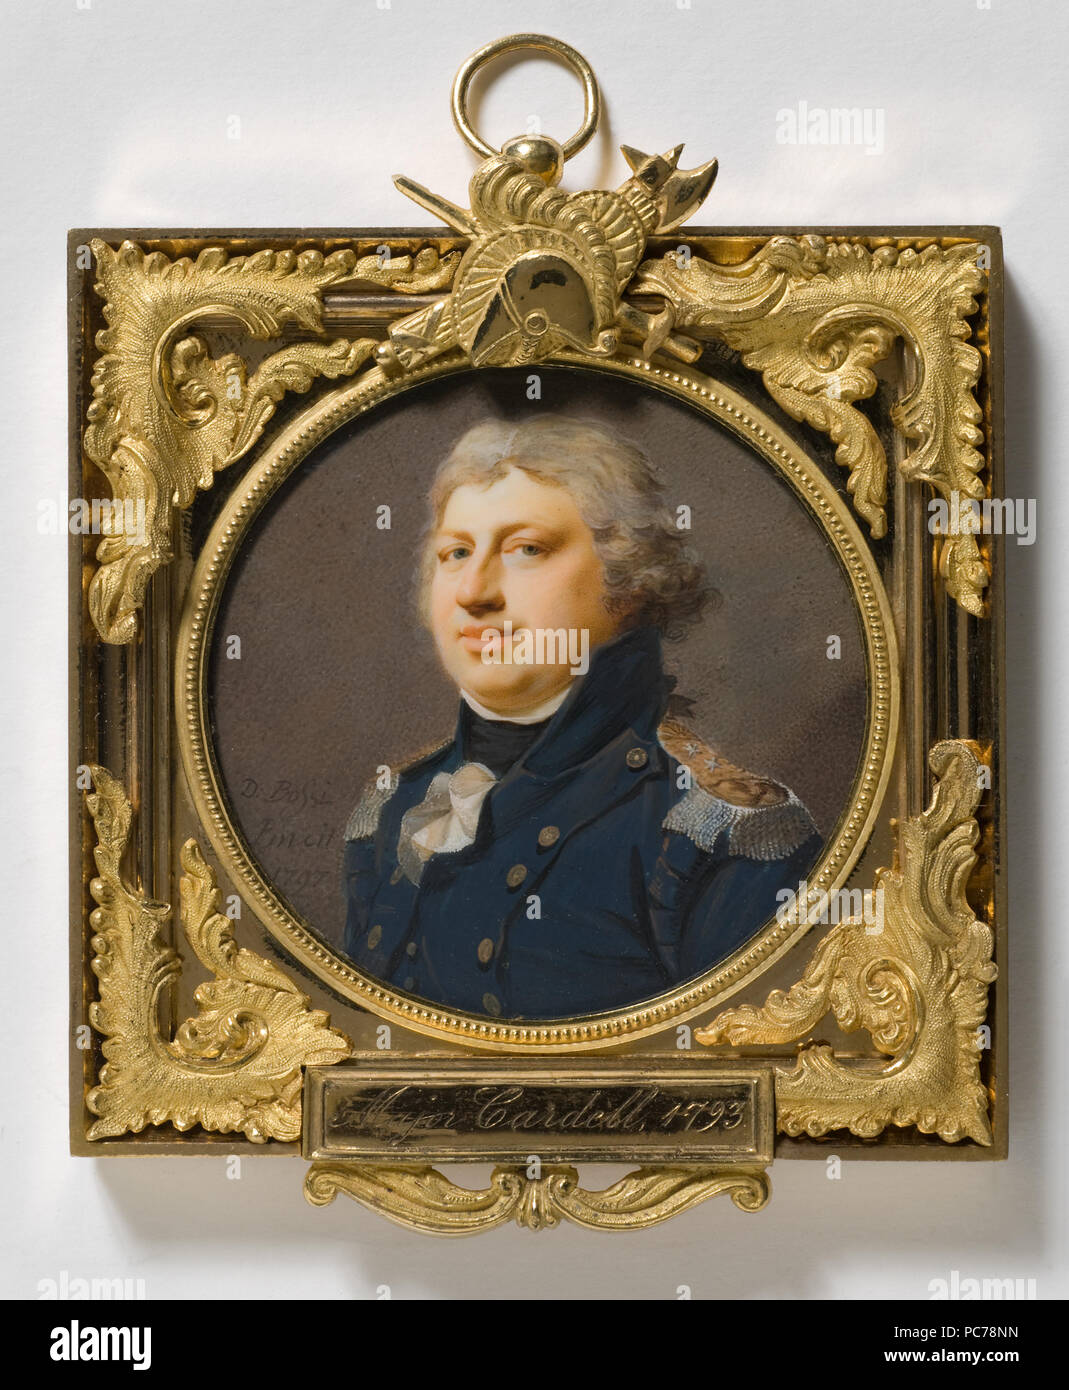 https://c8.alamy.com/comp/PC78NN/17-carl-von-cardell-1764-1821-lieutenant-general-giovanni-domenico-bossi-nationalmuseum-24043-PC78NN.jpg